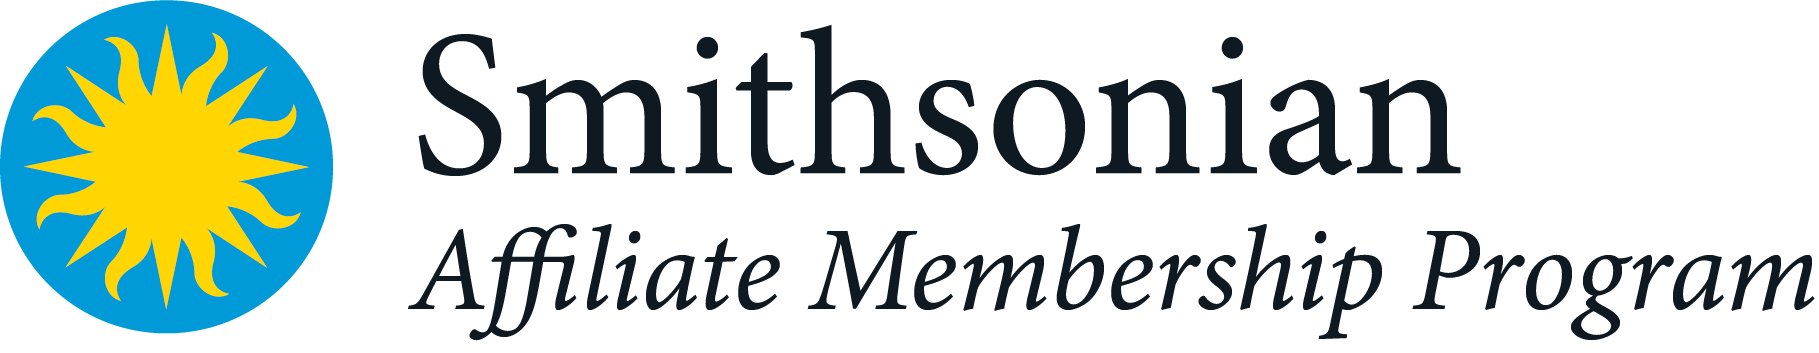 Smithsonian Affiliate Logo